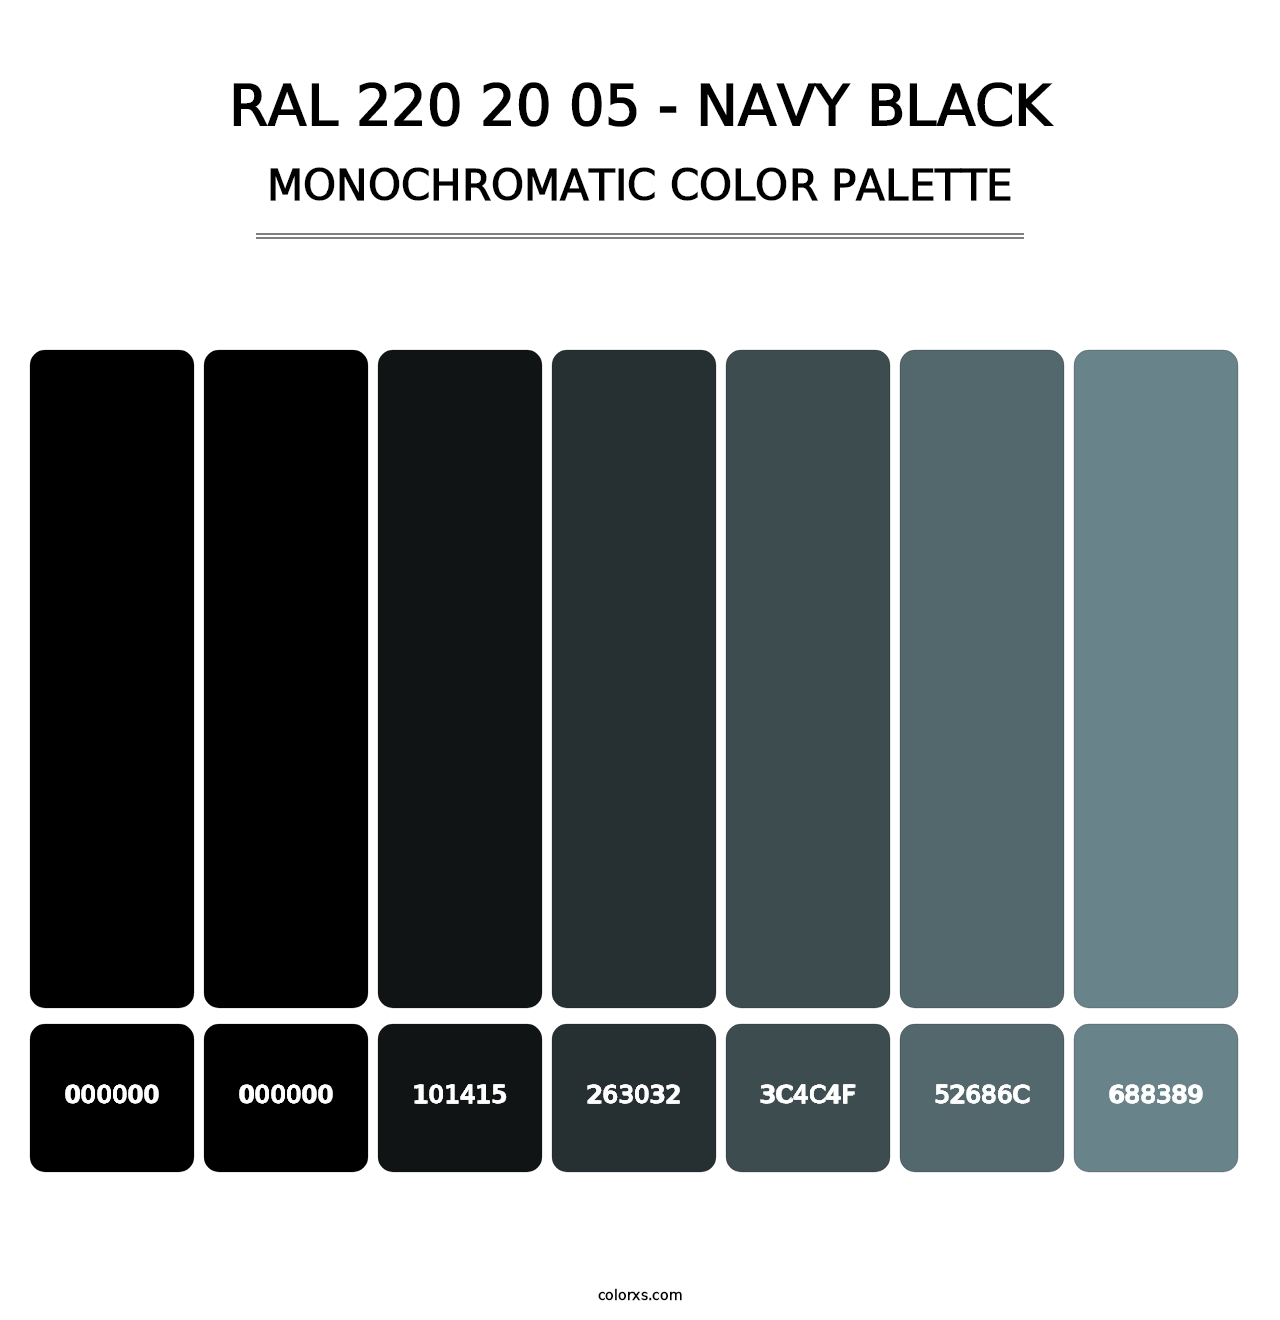 RAL 220 20 05 - Navy Black - Monochromatic Color Palette